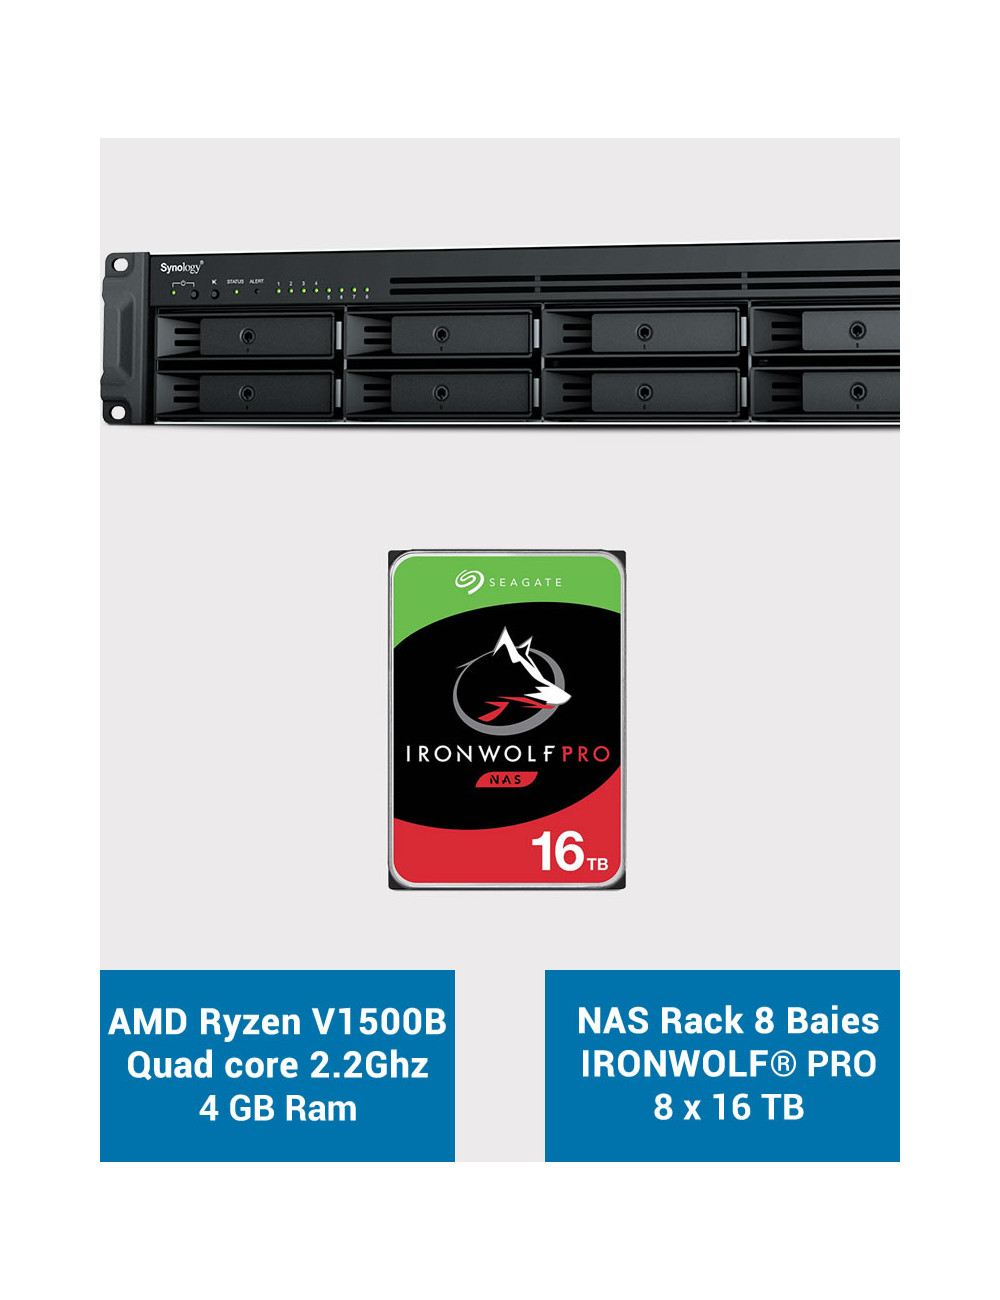 Synology RS1221+ NAS Rack Server IRONWOLF PRO 128TB (8x16TB)